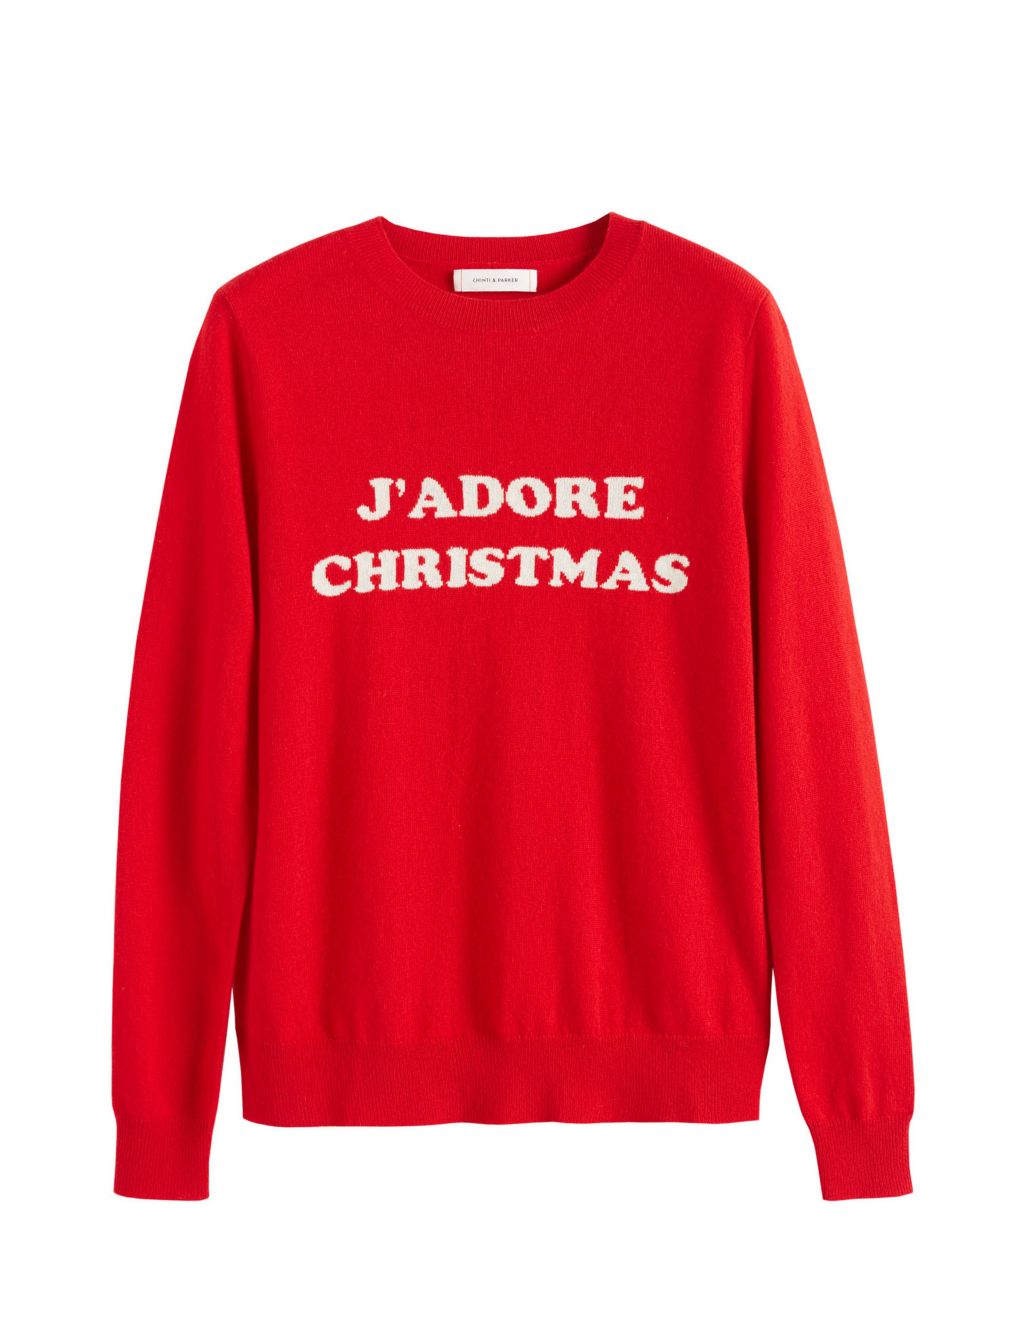 Cashmere Rich J'Adore Christmas Jumper image 2